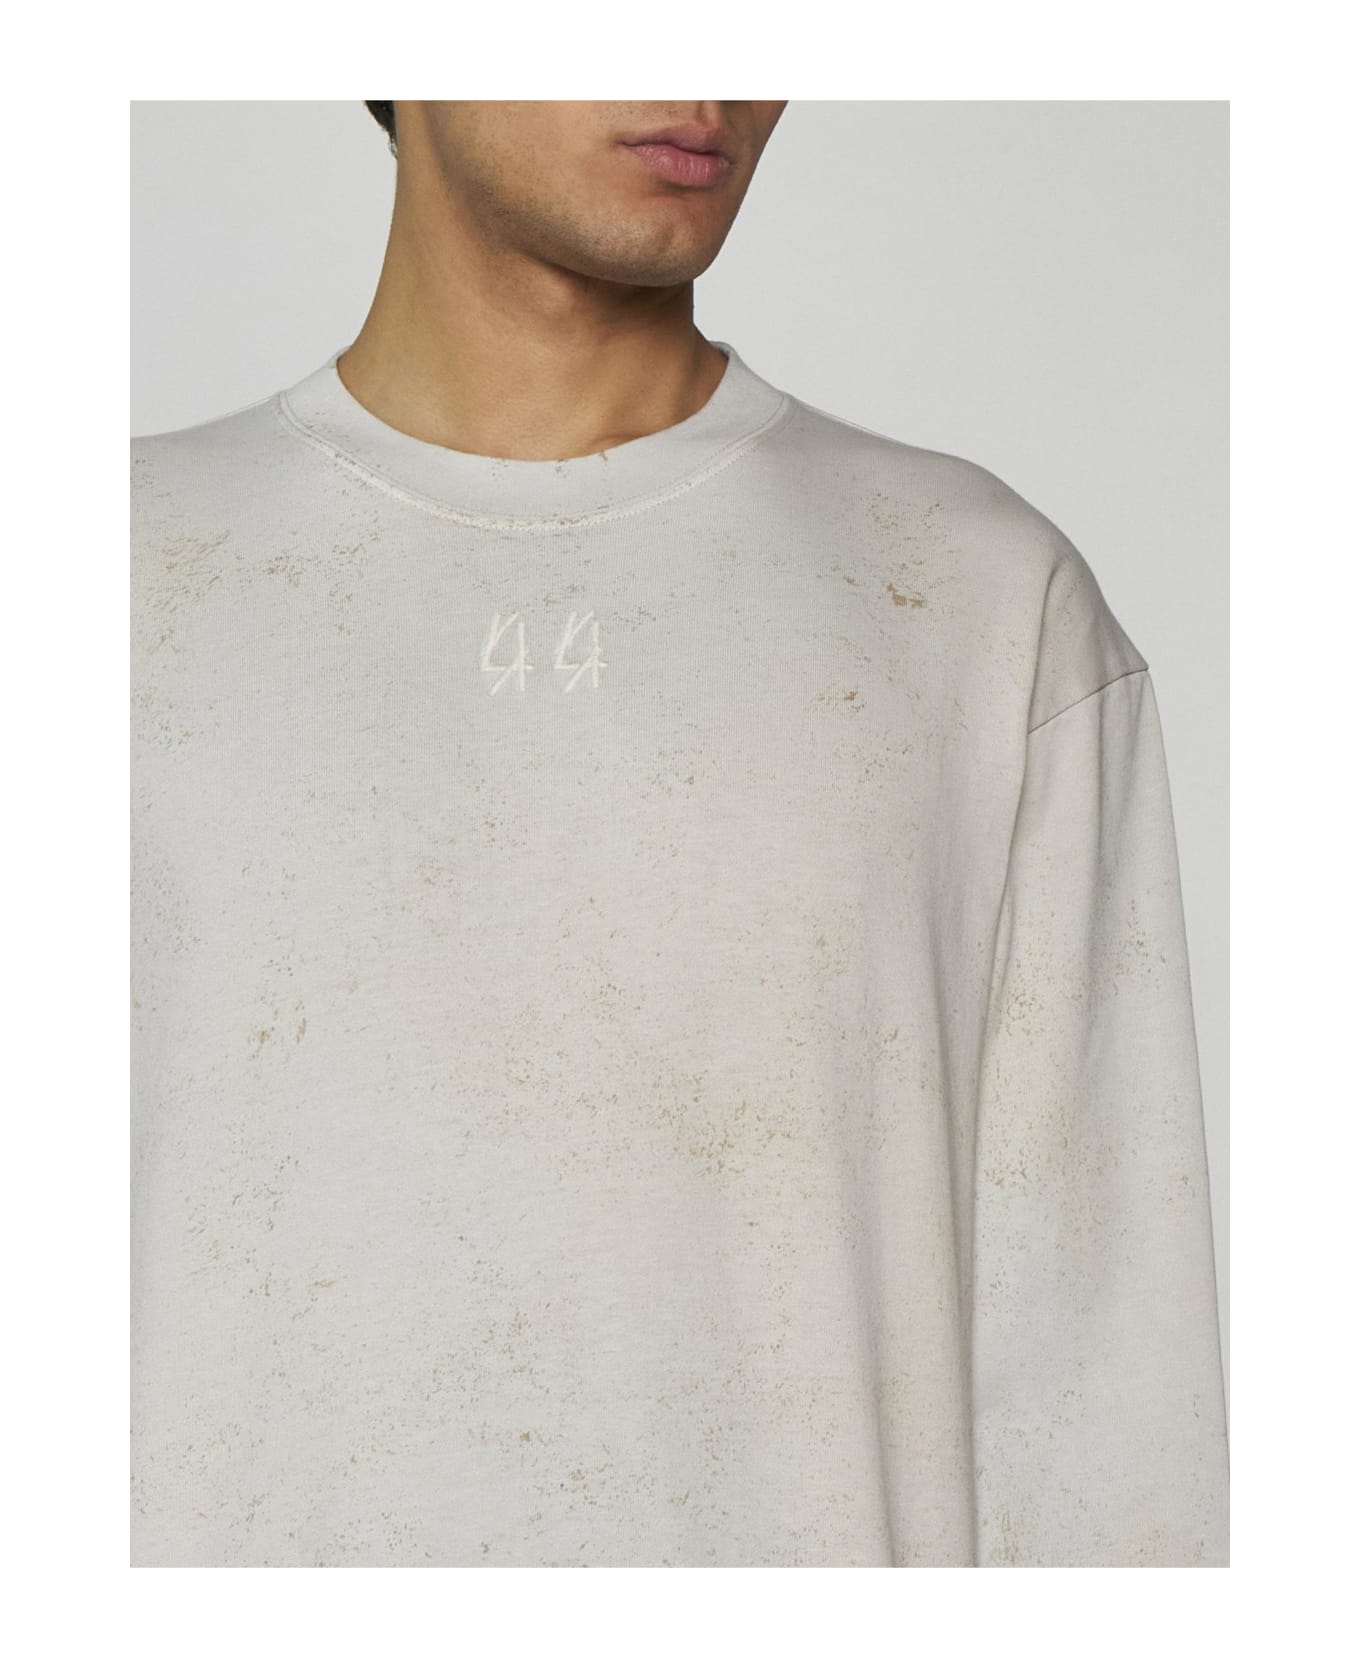 44 Label Group Back Holes Cotton Sweatshirt - Dirty white+gyps